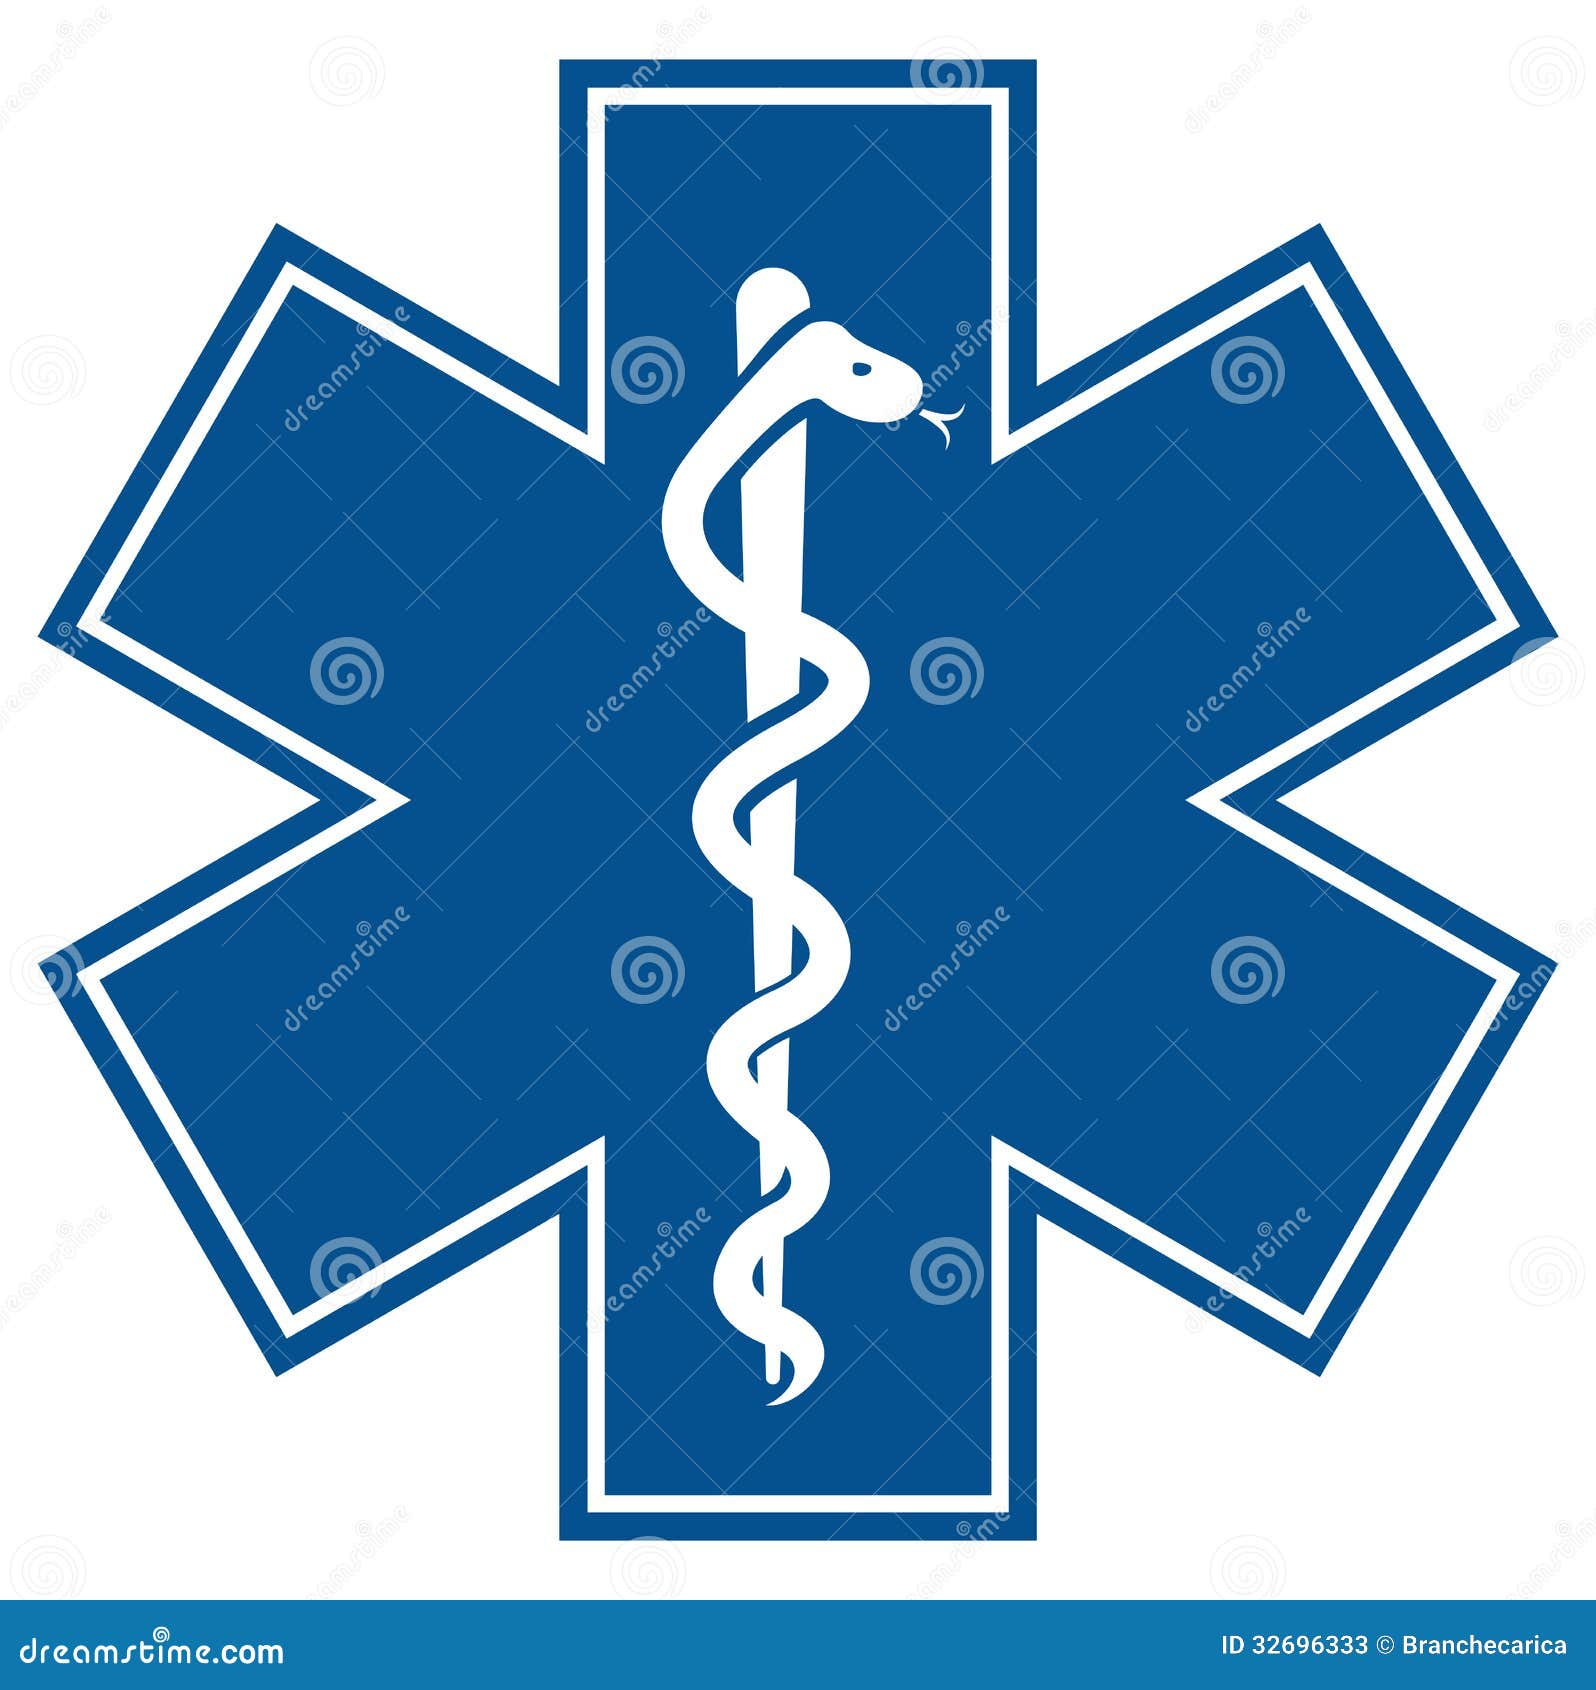 ambulance snake symbol